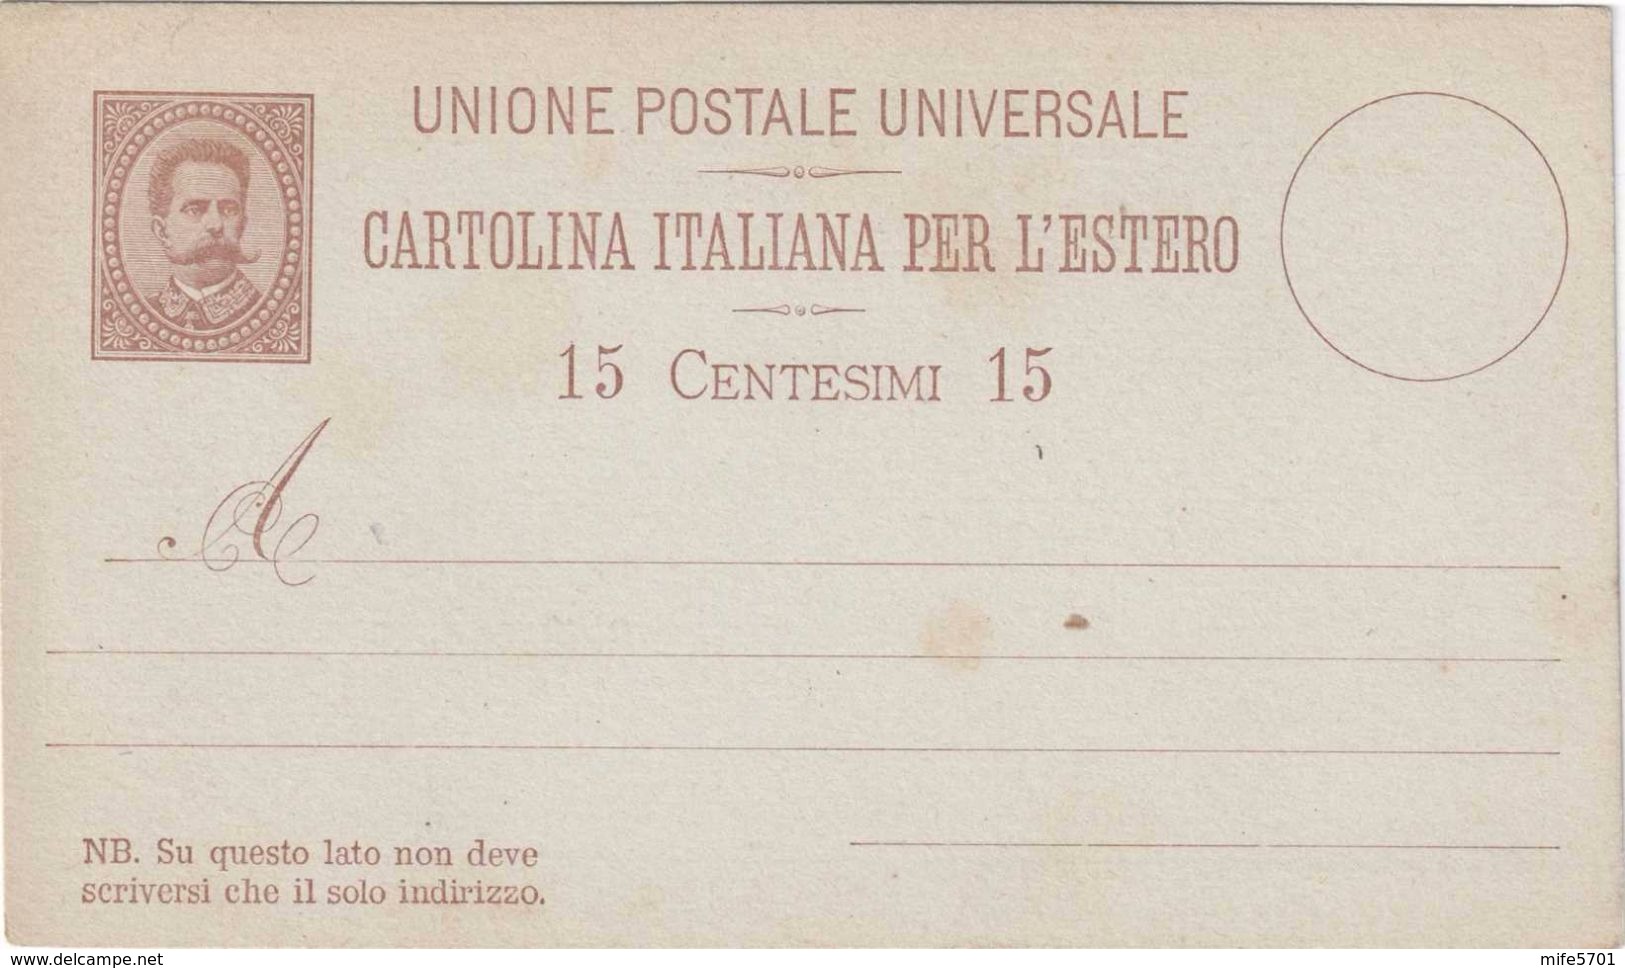 CARTOLINA POSTALE TIPO UMBERTO I UPU ESTREMO RAGGIO C. 15 - 1883 - CATALOGO FILAGRANO "C9" - NUOVA ** - Stamped Stationery